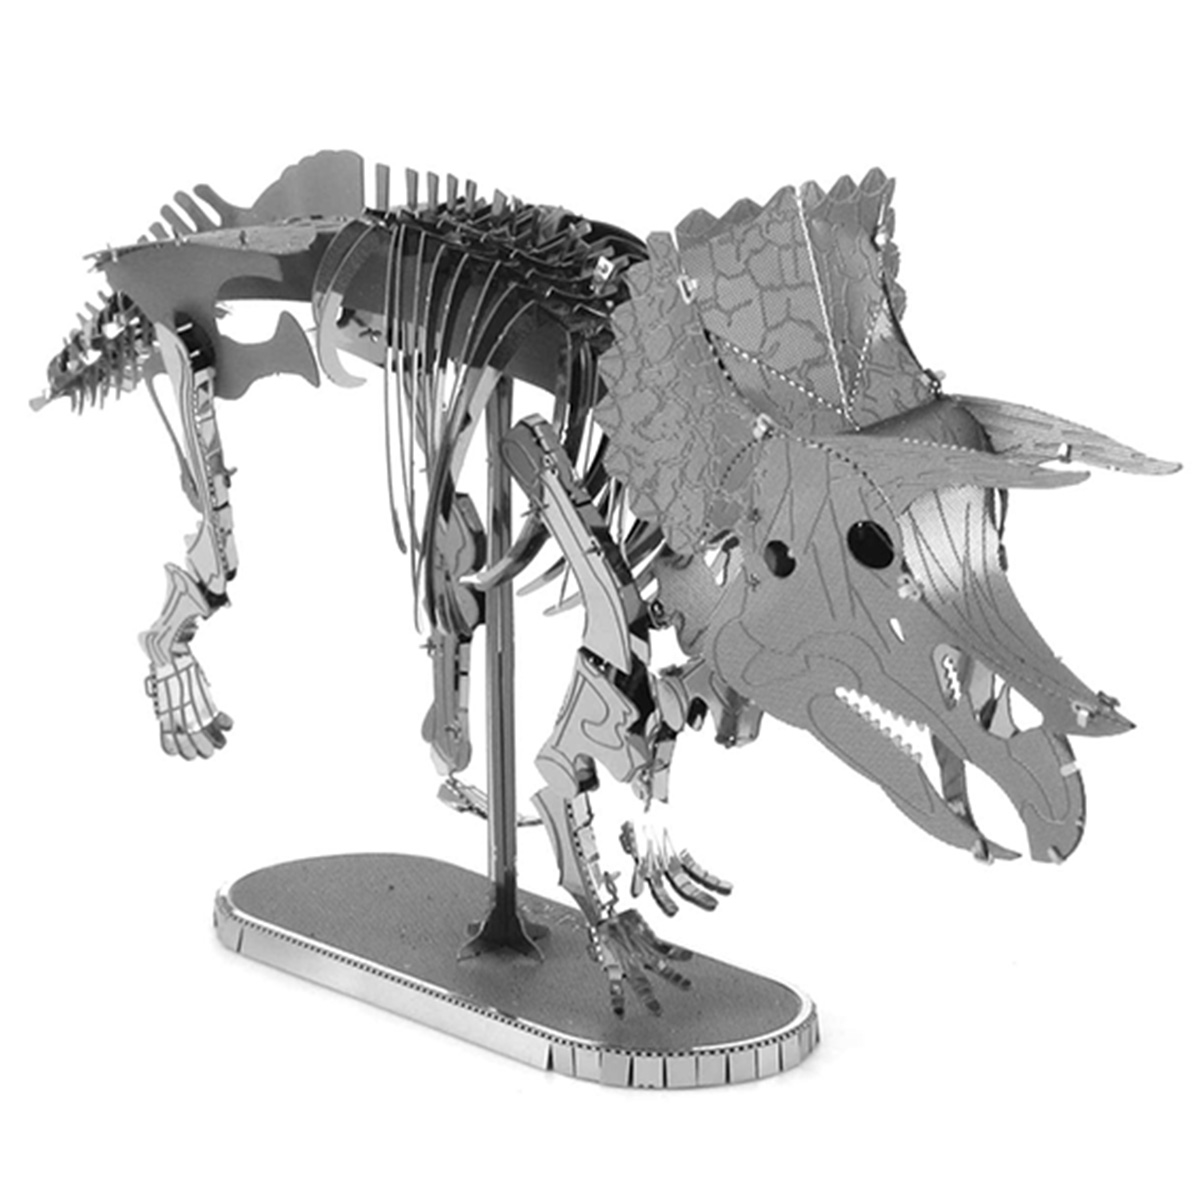 Fascinations Metal Earth 3D Laser Cut Model Kit Dinosaur Pteranodon Skeleton 